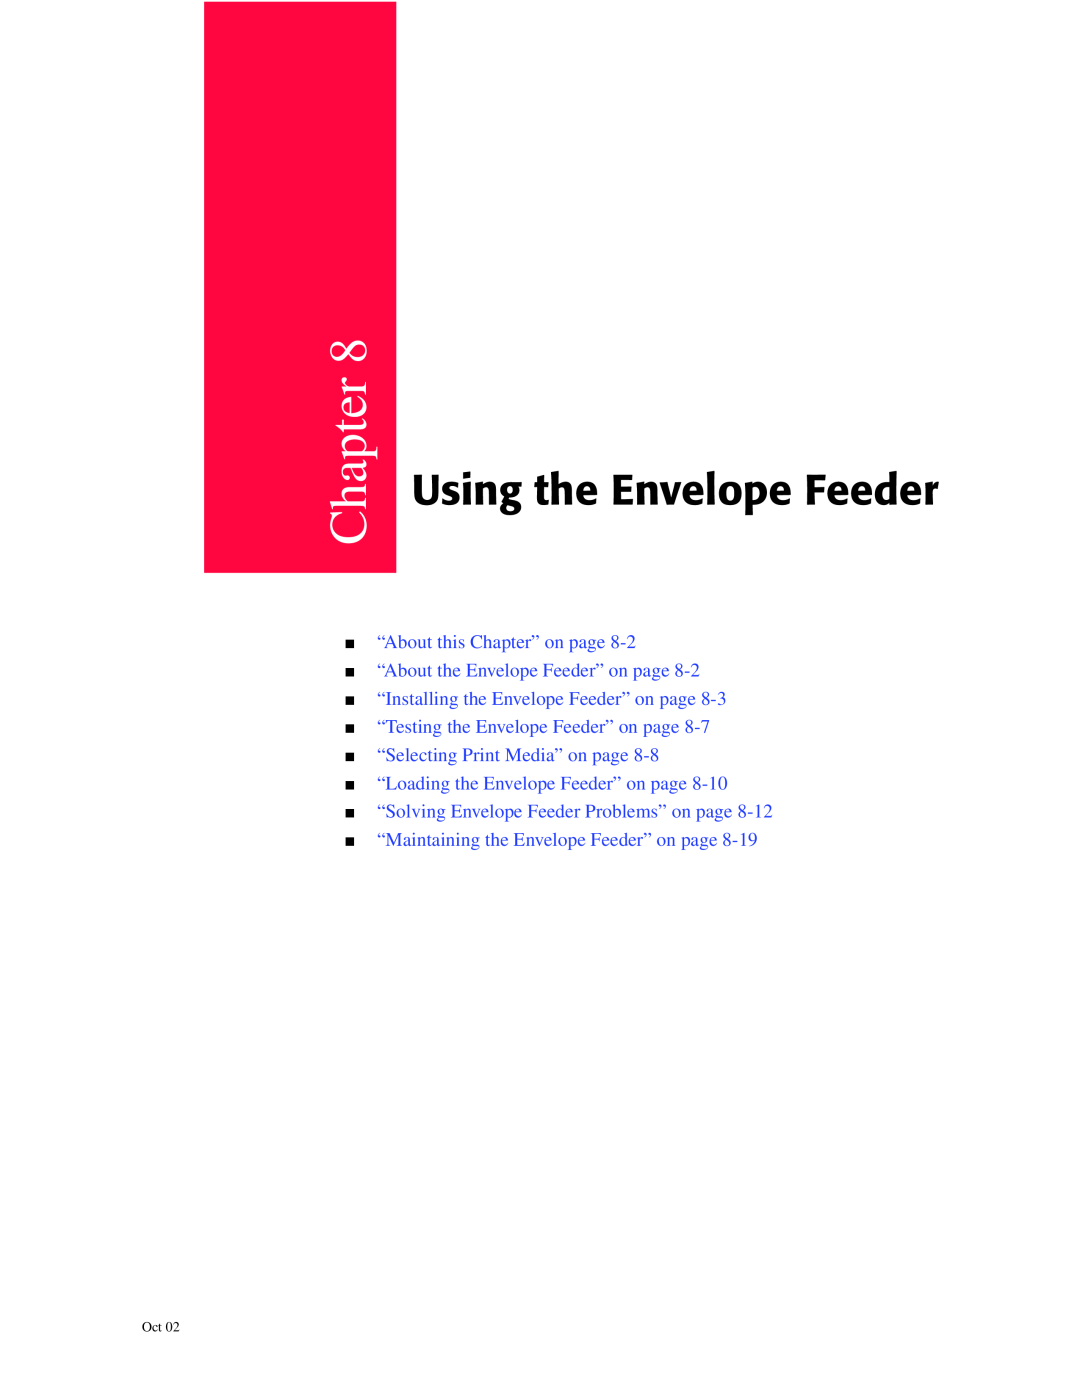 Oki 6100 manual Using the Envelope Feeder, “About this Chapter” on page “About the Envelope Feeder” on page 